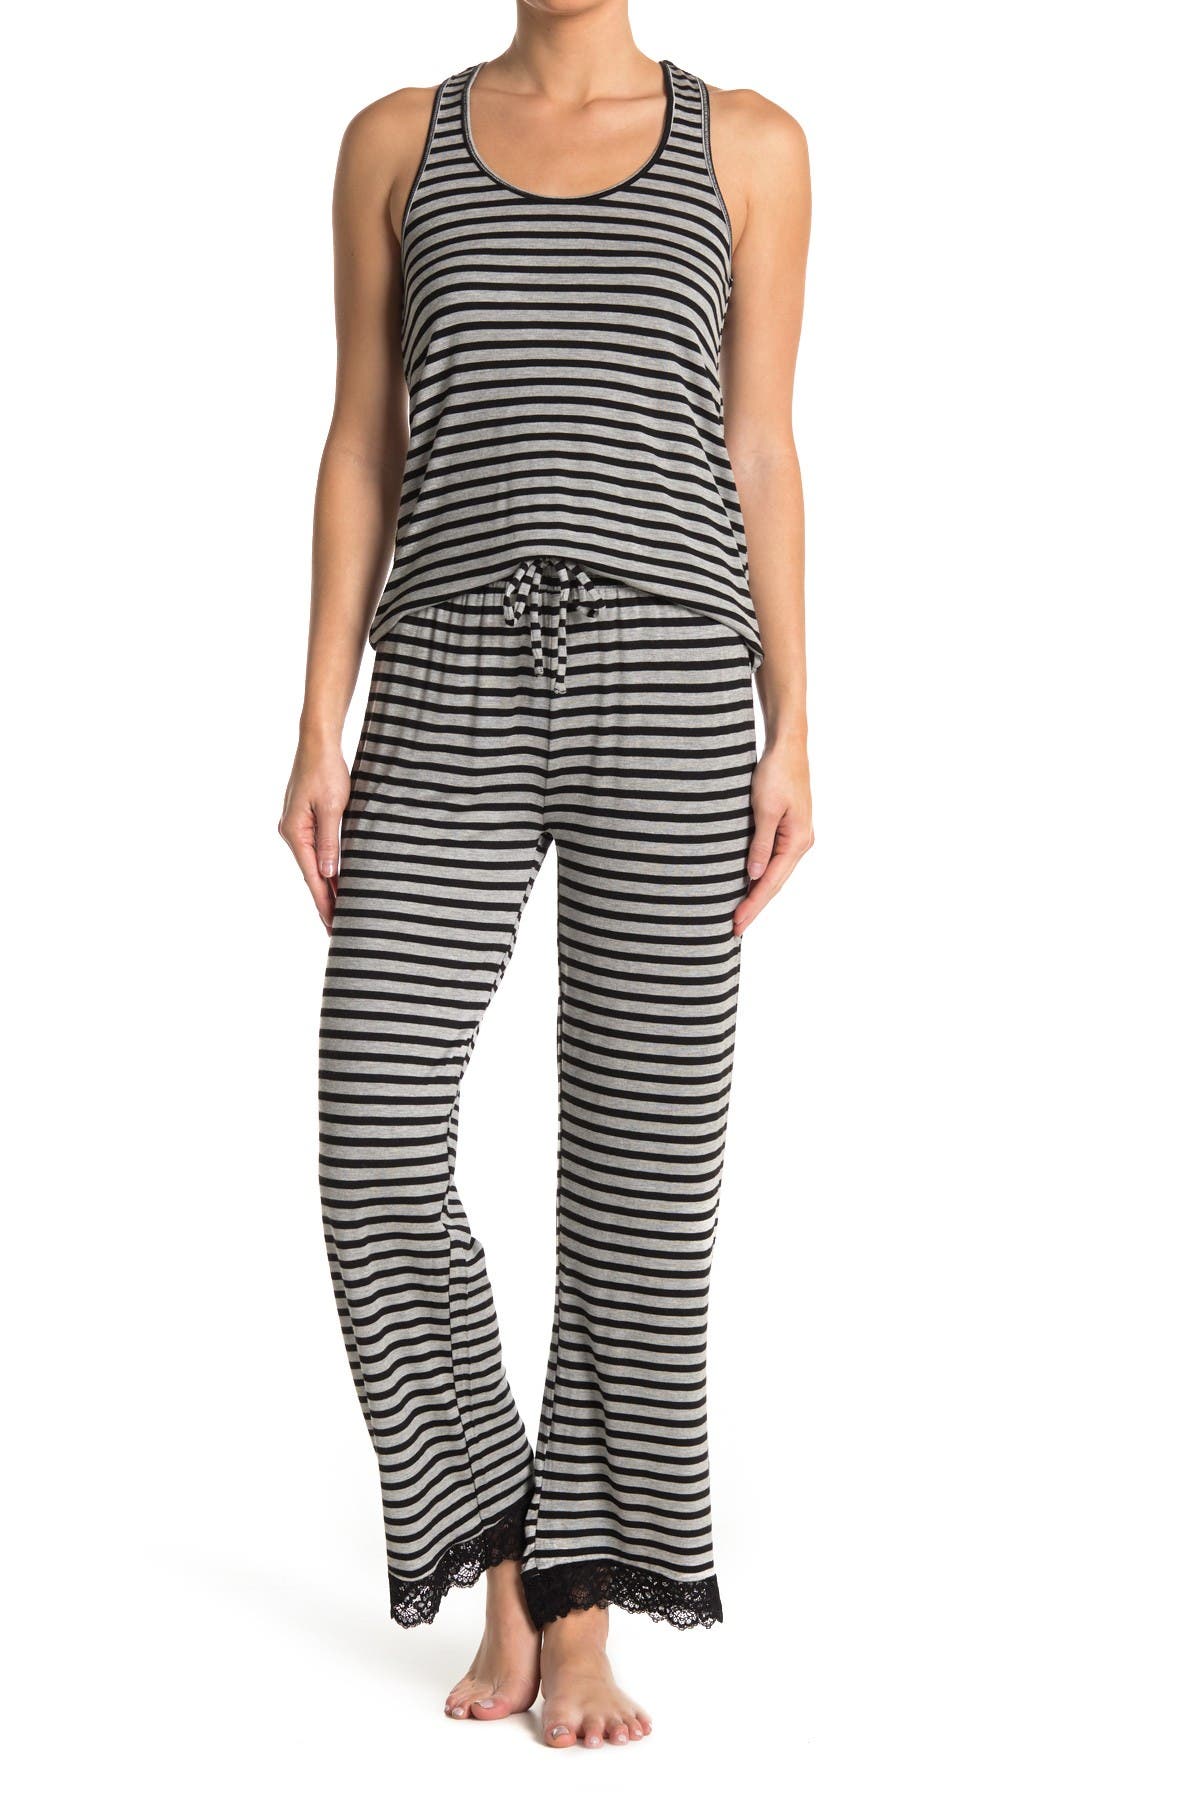 Honeydew Intimates Striped Lace Trim Tank & Pants 2-piece Pajama Set In Blackstripe